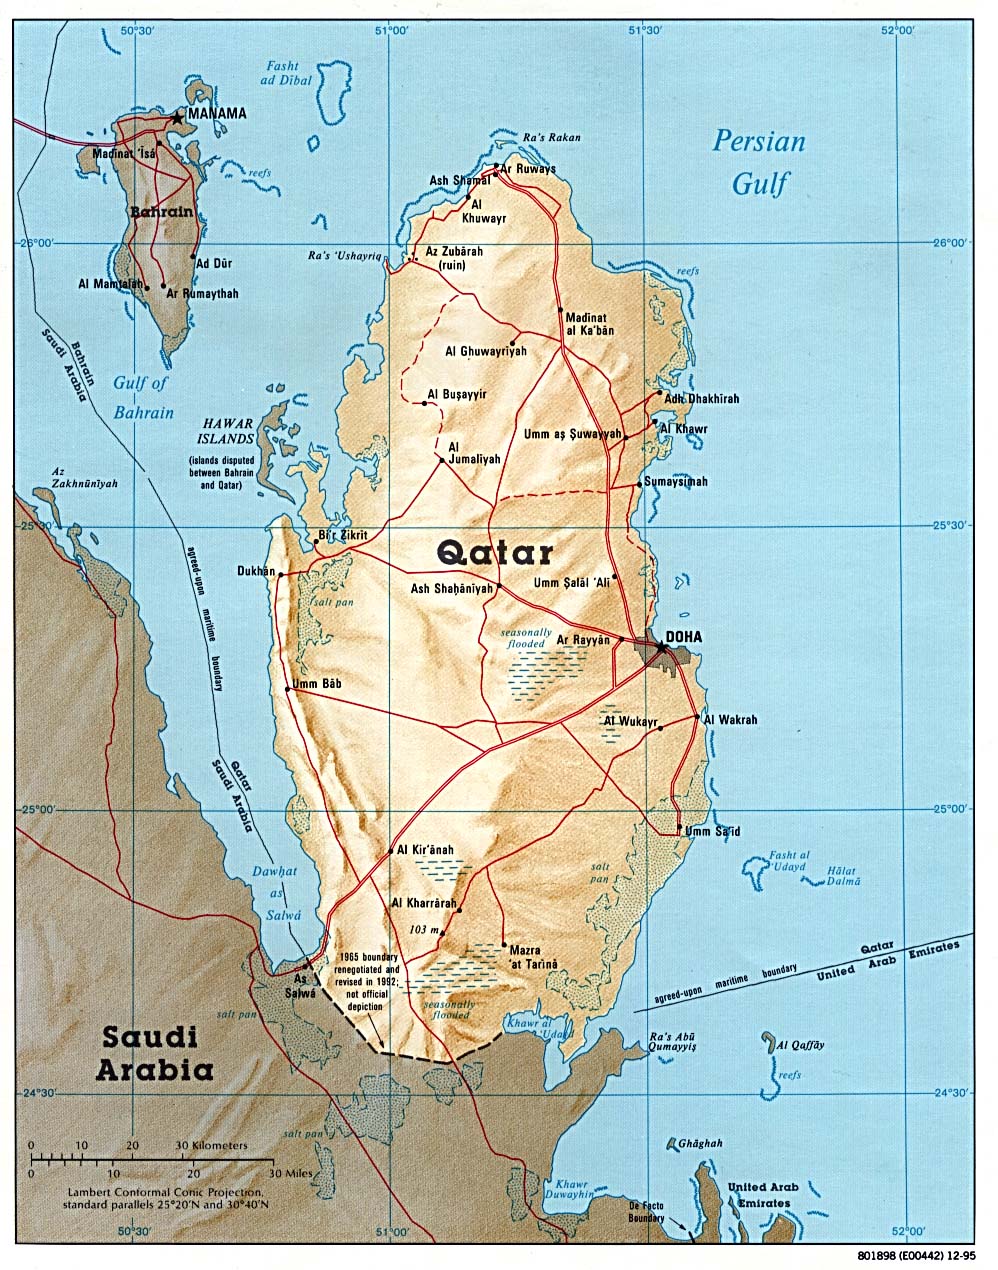 Qatar relief map